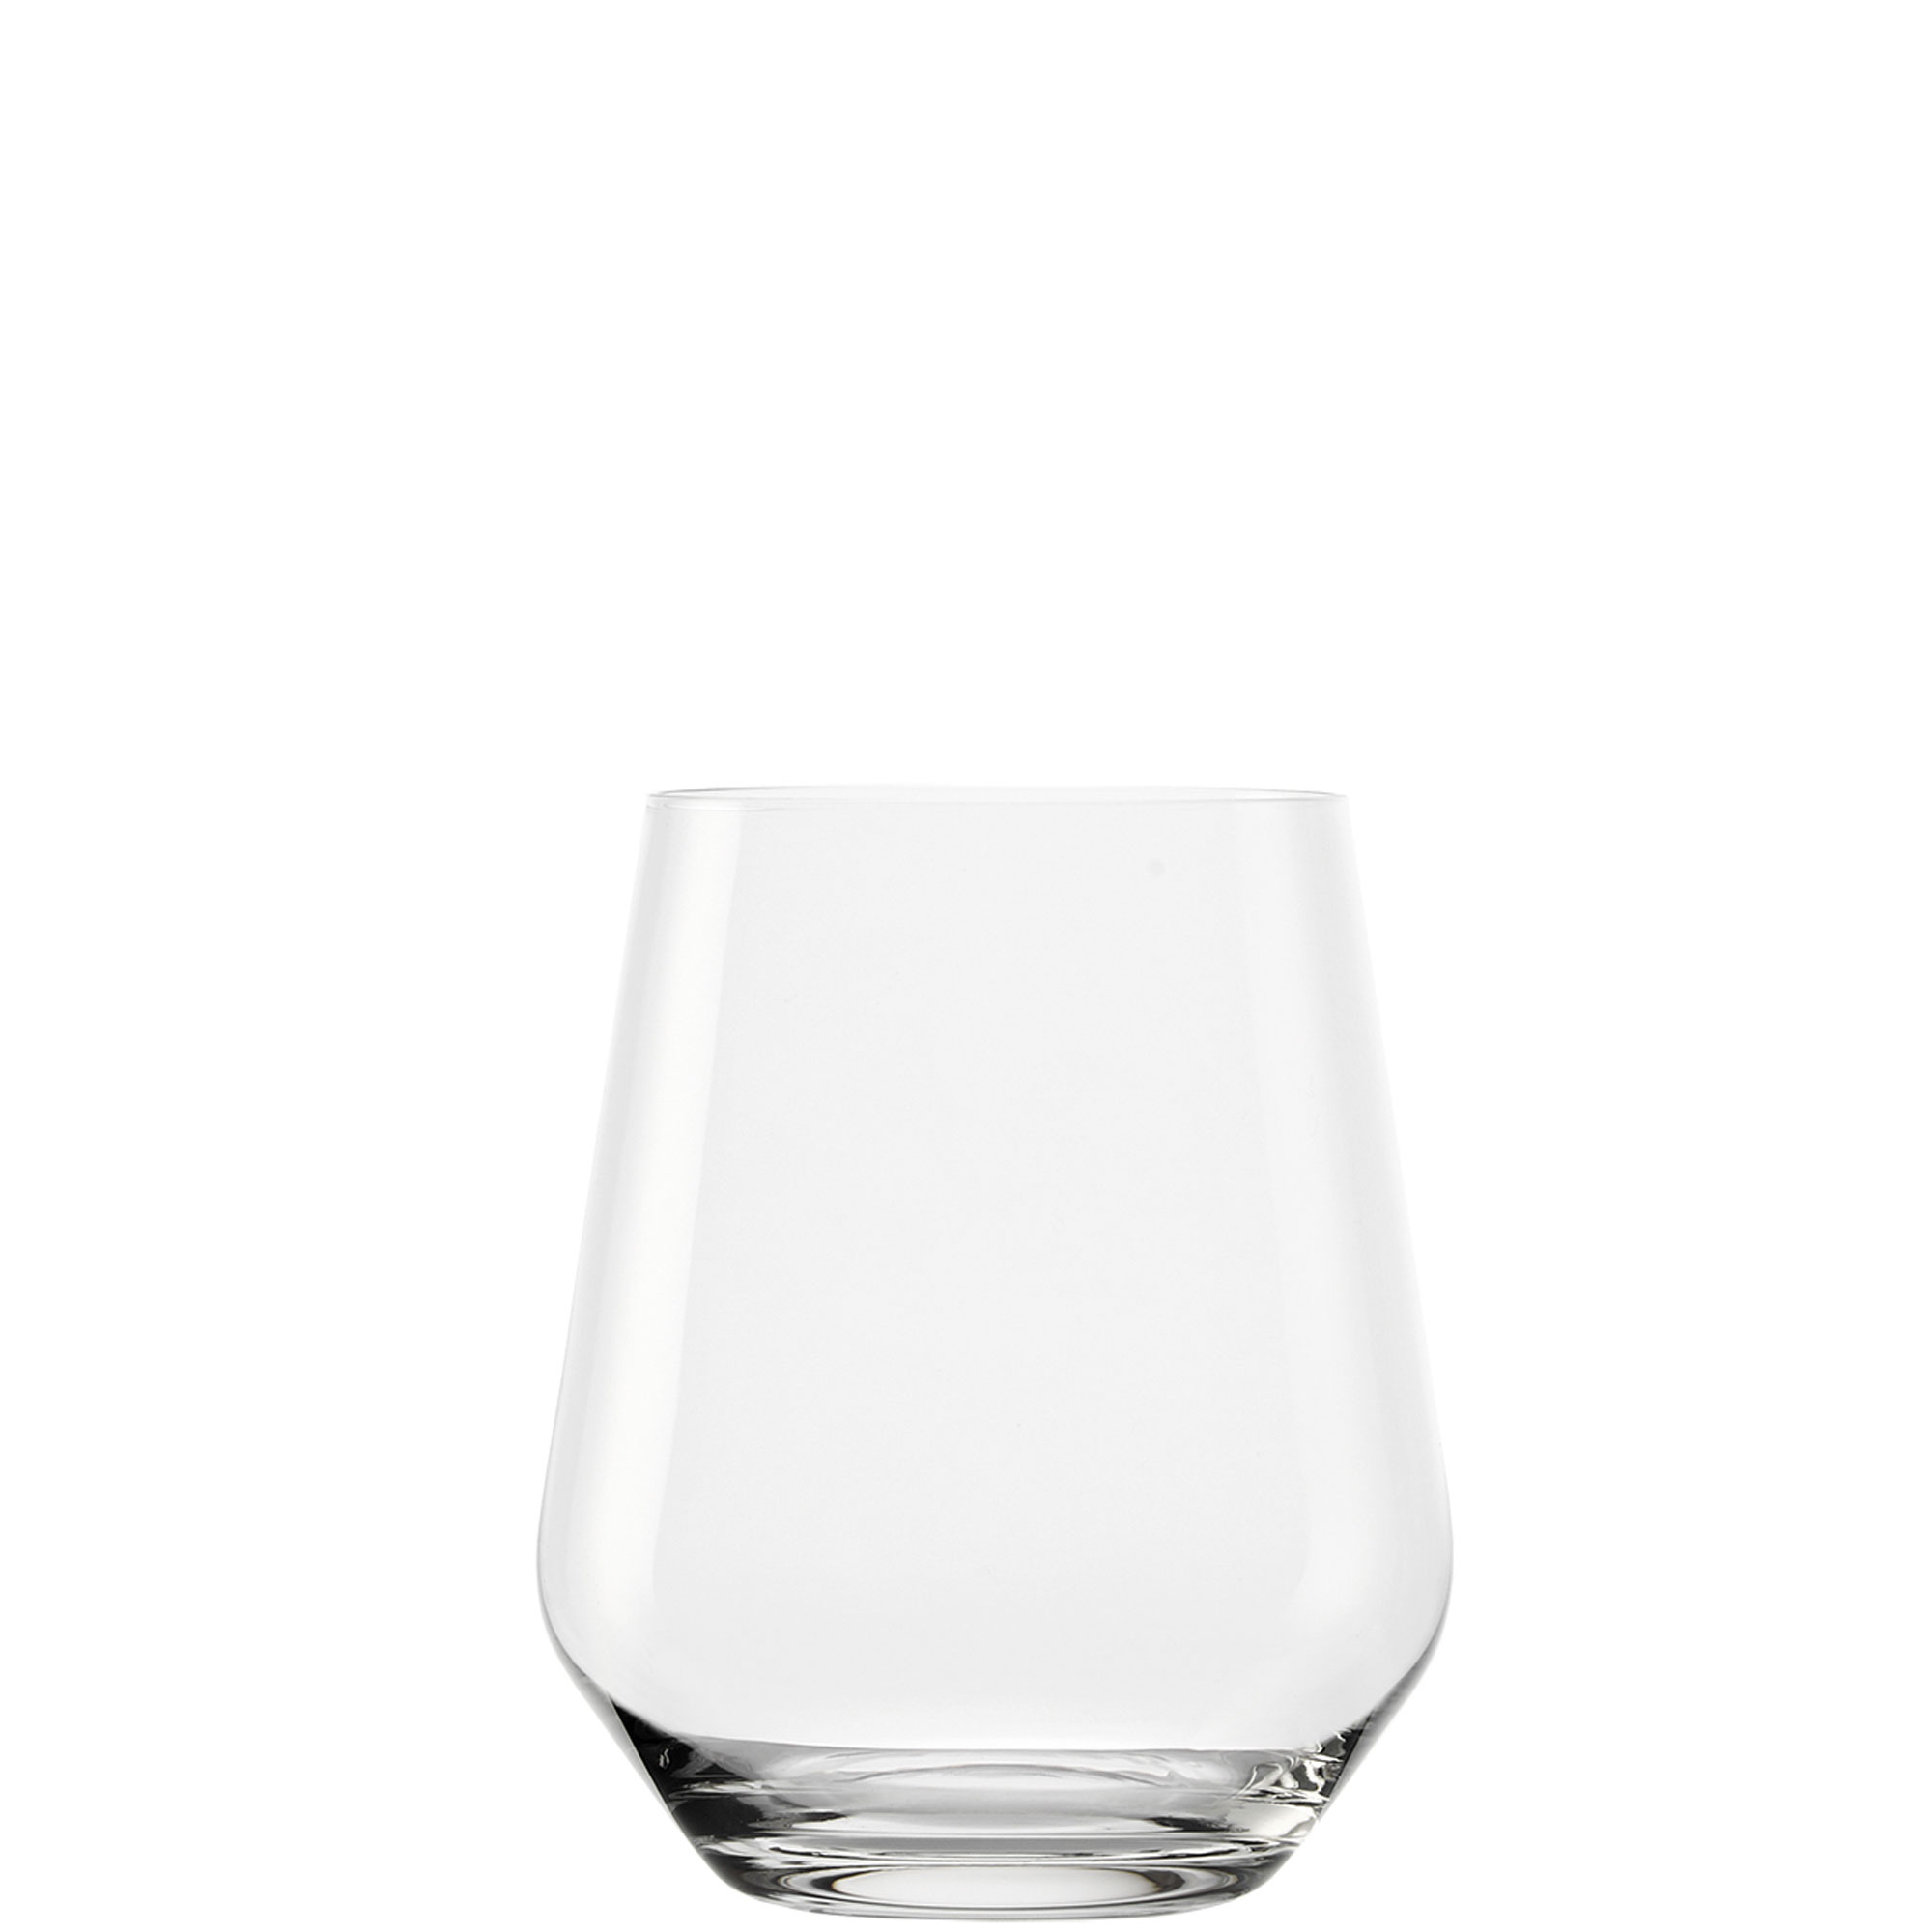 Whisky glass S.O.F. Quatrophil, Stölzle - 370ml (1 pc.)